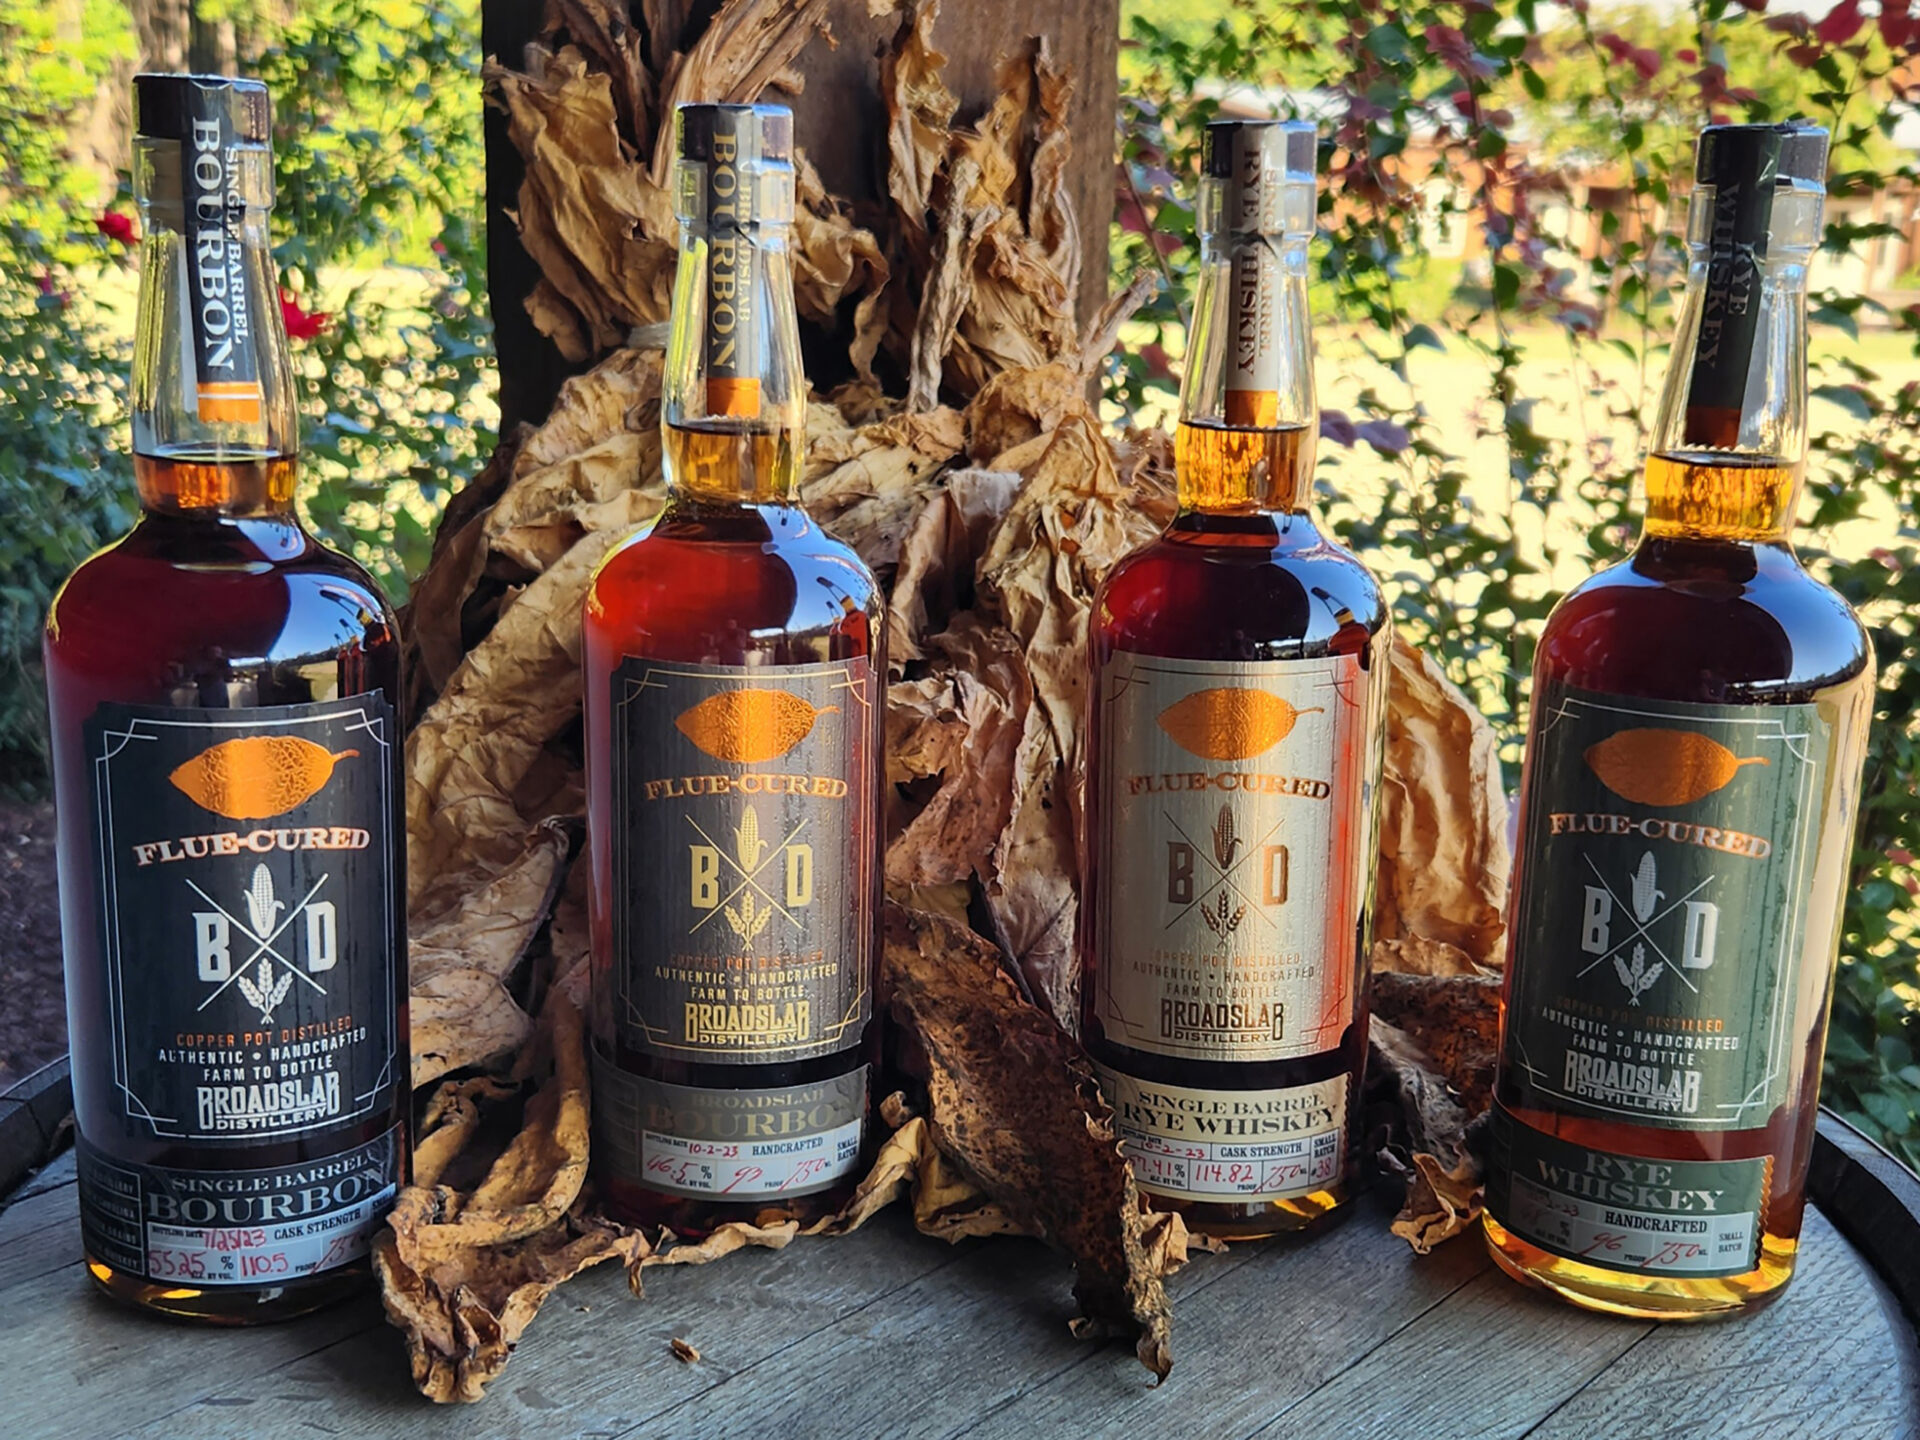 Benson's Broadslab Bourbon and Whiskey product lineup. 